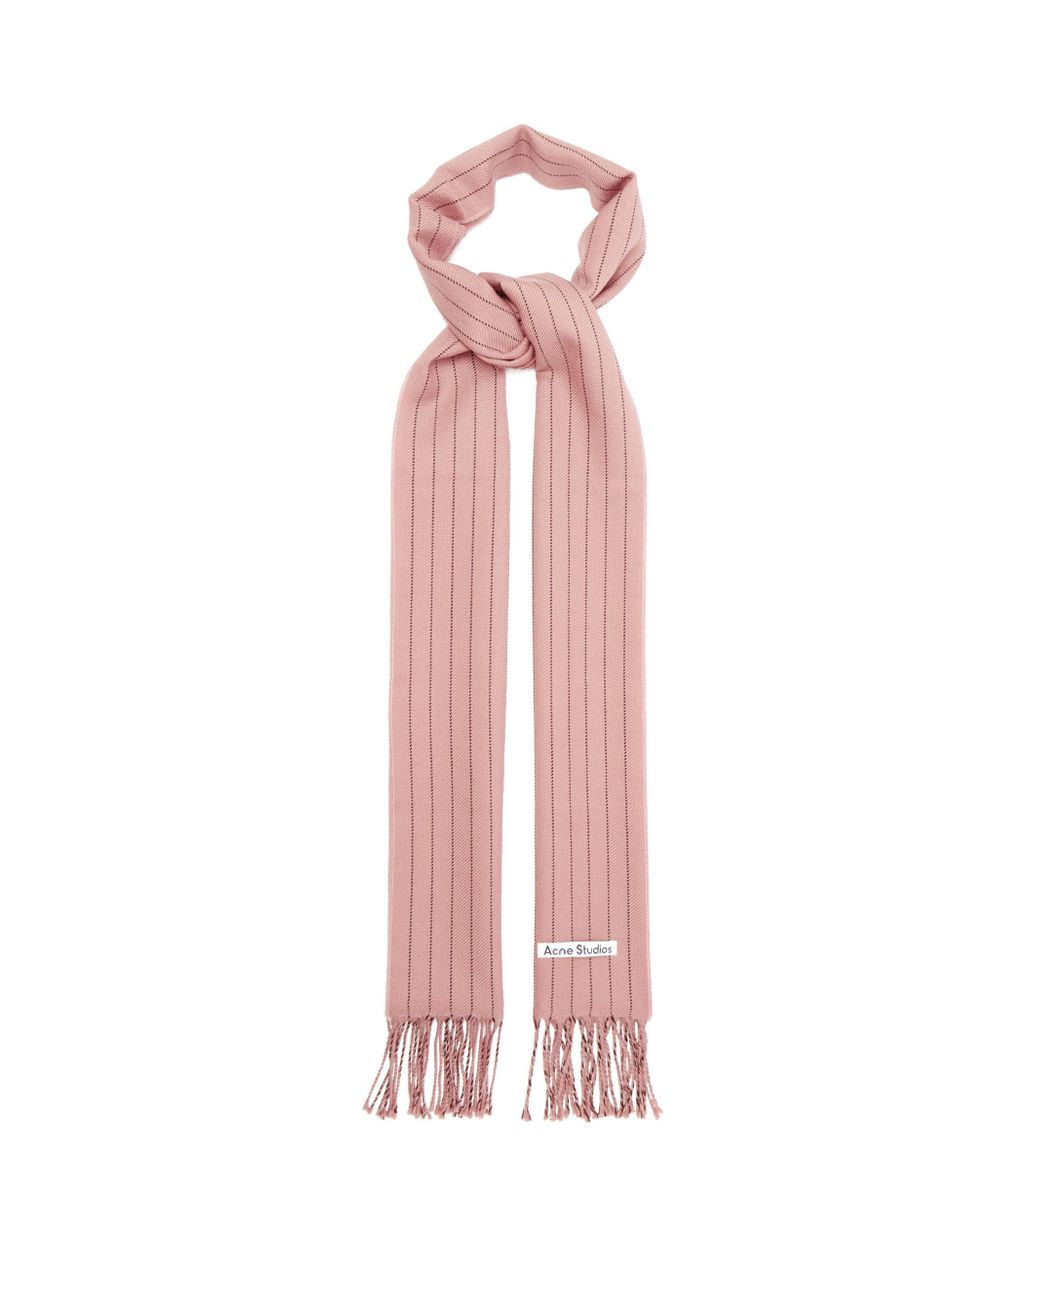 Acne Studios Vonnie Striped Wool Scarf in Pink White (Pink) - Lyst